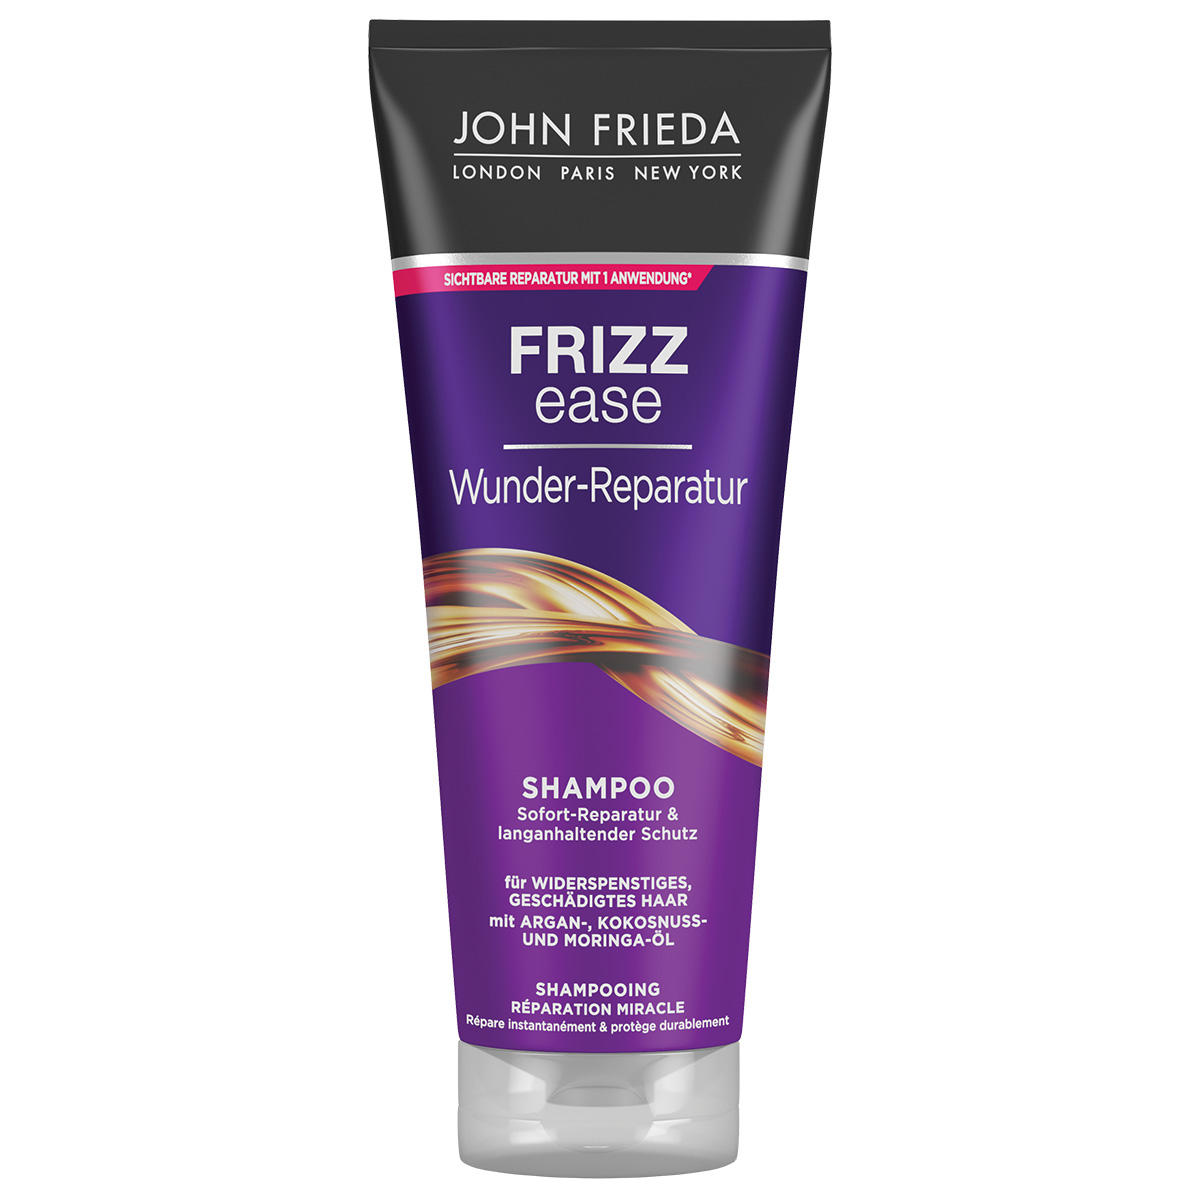 JOHN FRIEDA Frizz Ease Shampoo riparazione miracolo 250 ml - 1